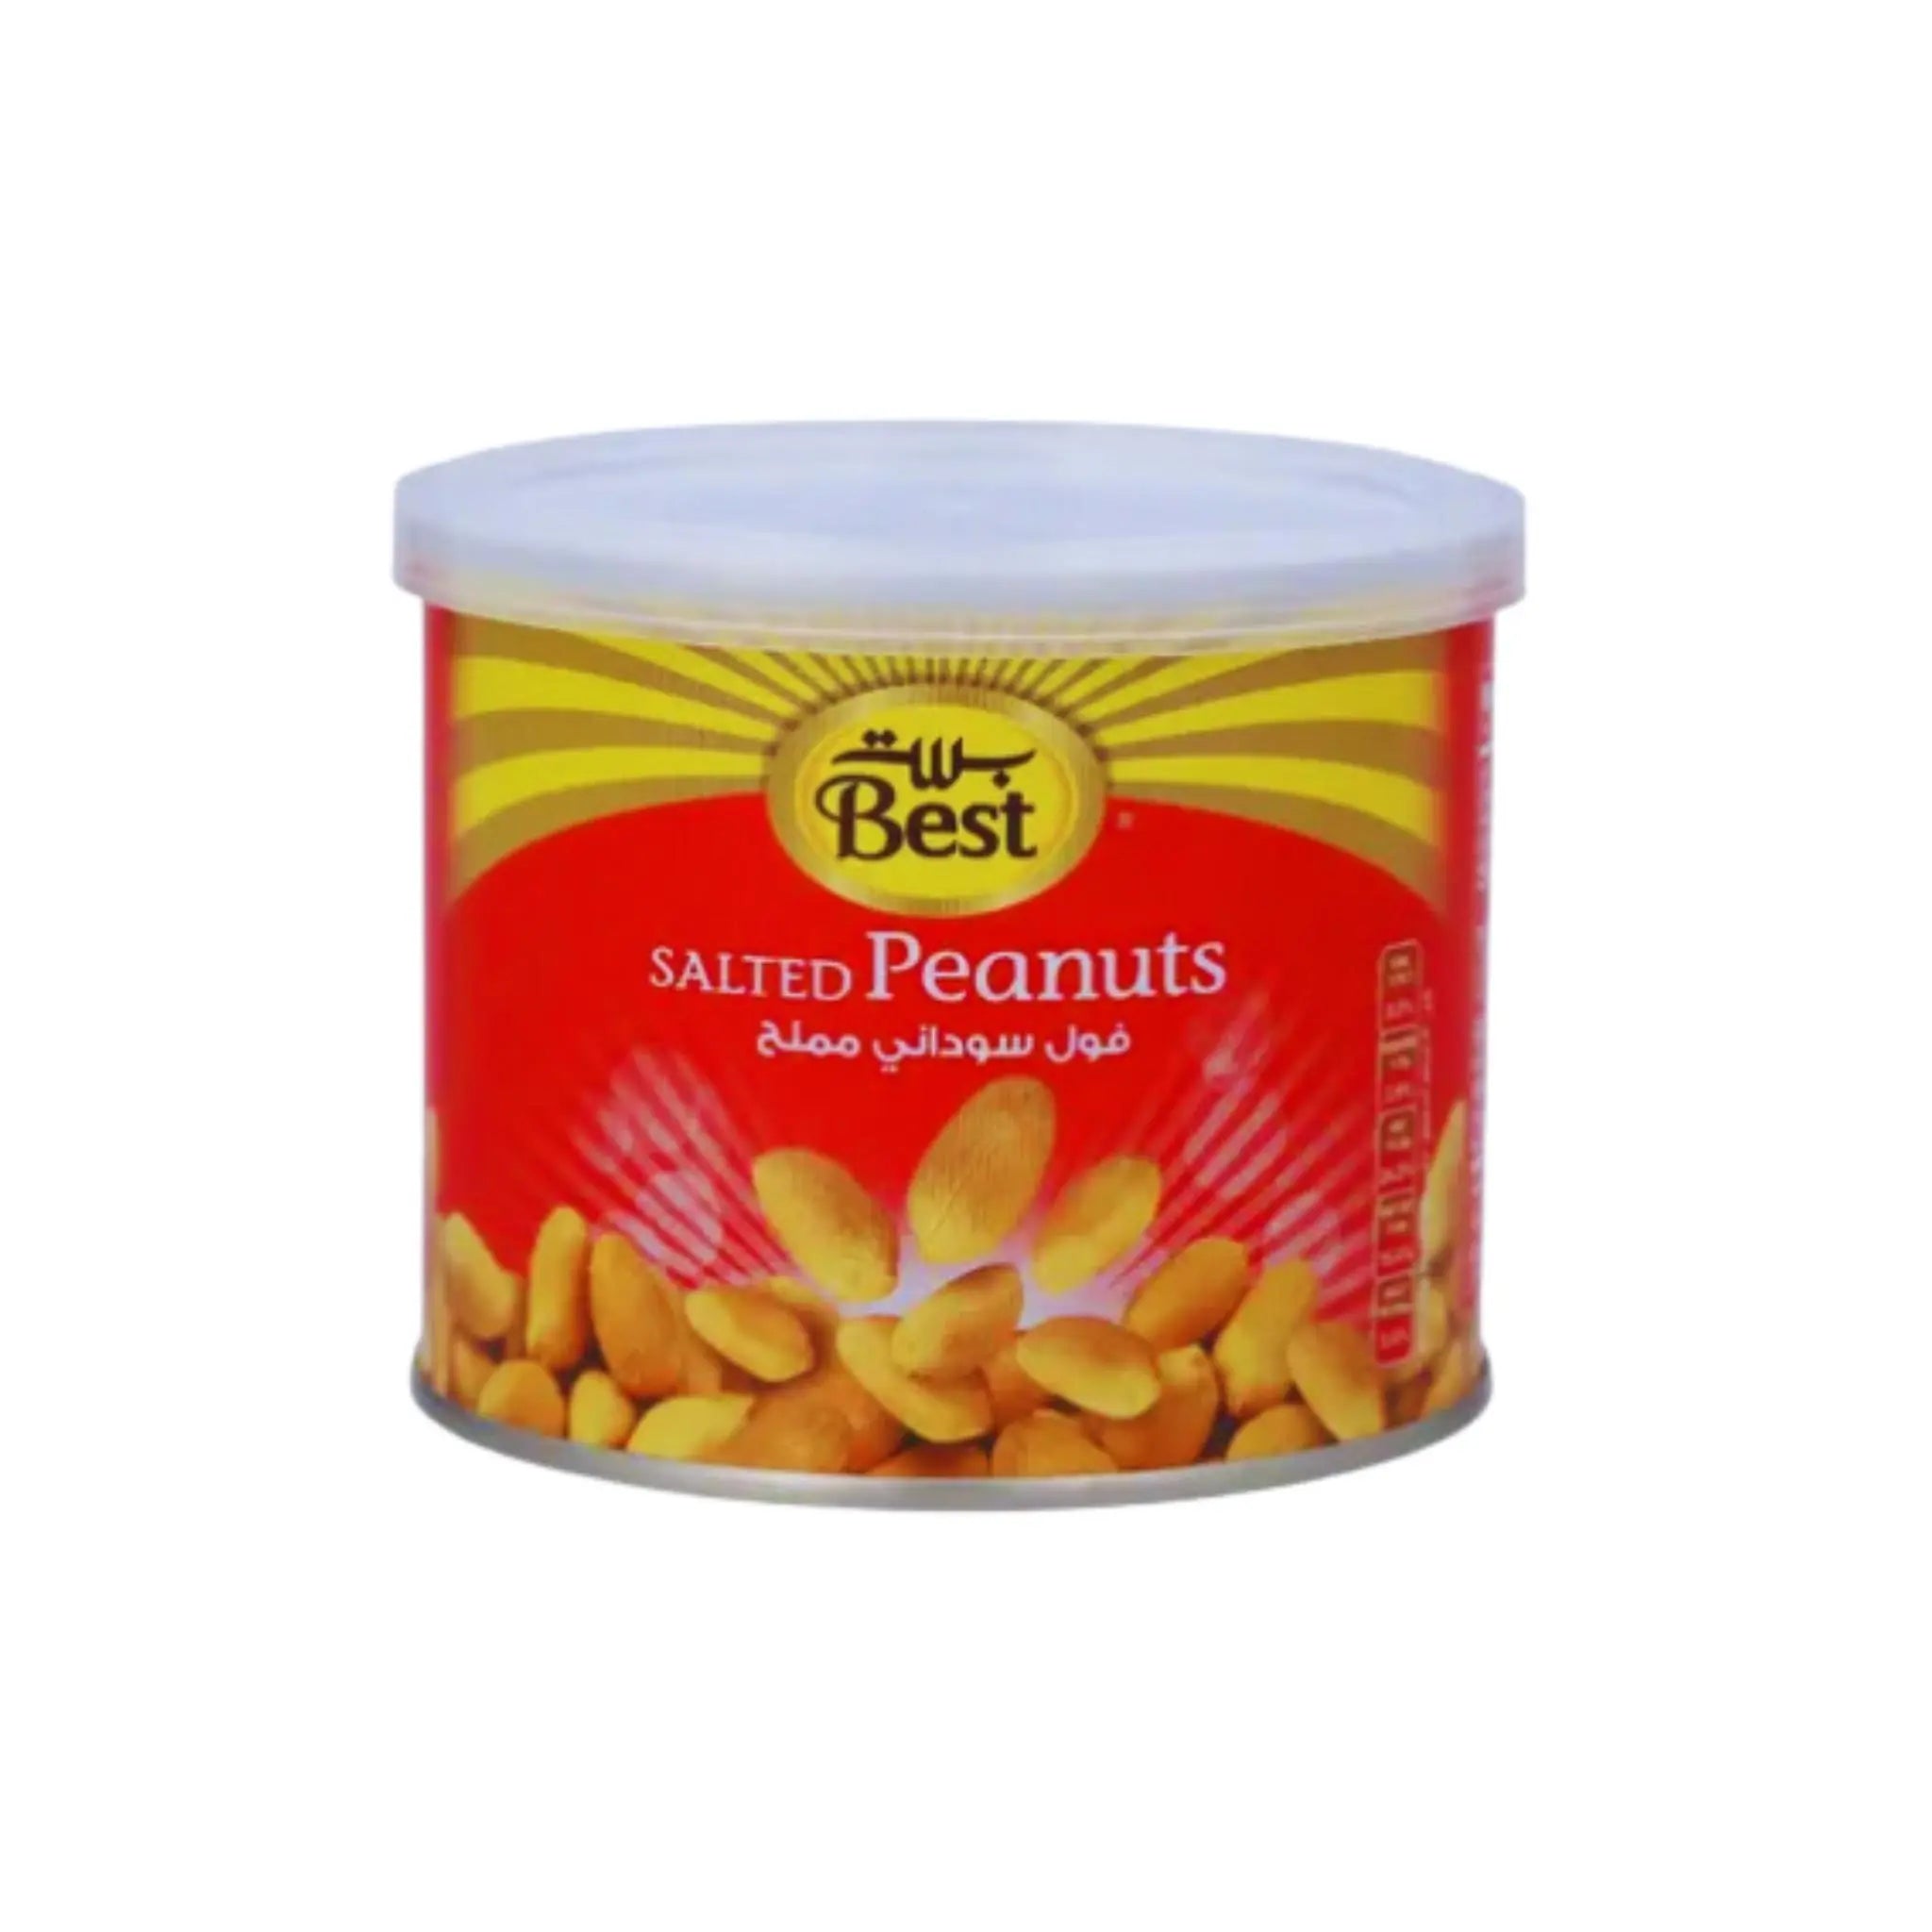 Best Salted Peanuts - 12x110g (1 carton) - Marino.AE